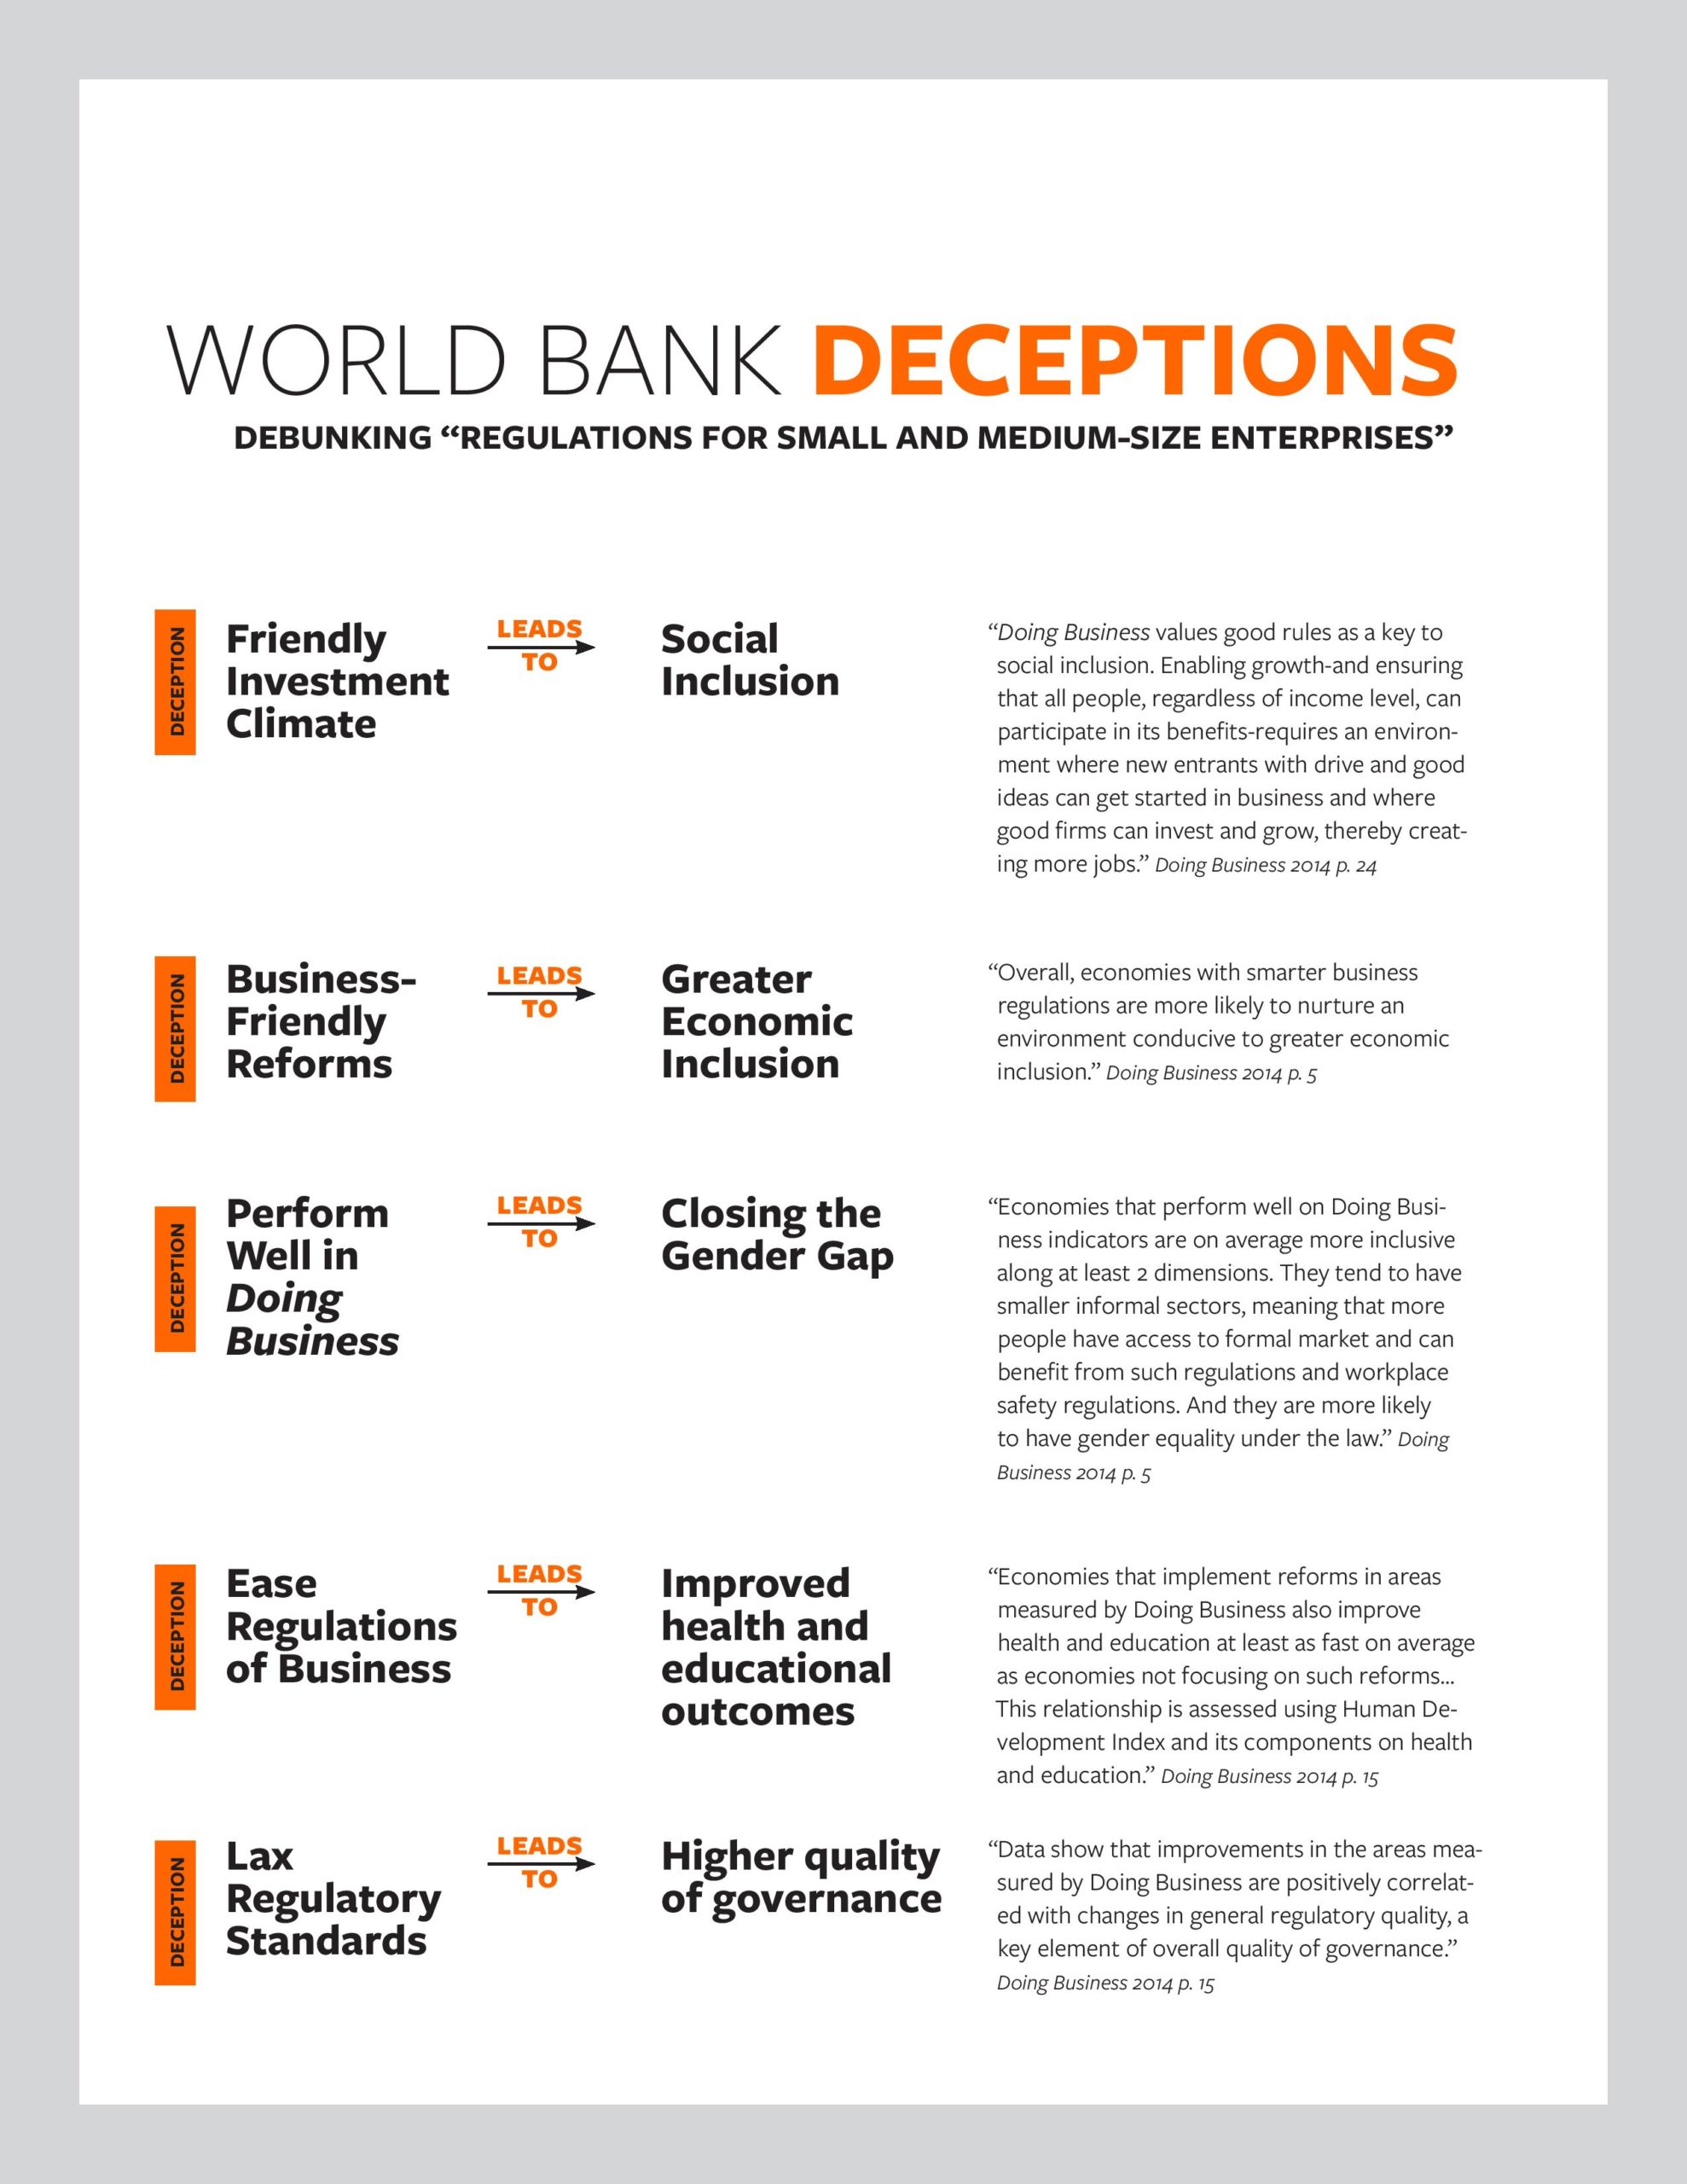 World Bank Deceptions chart